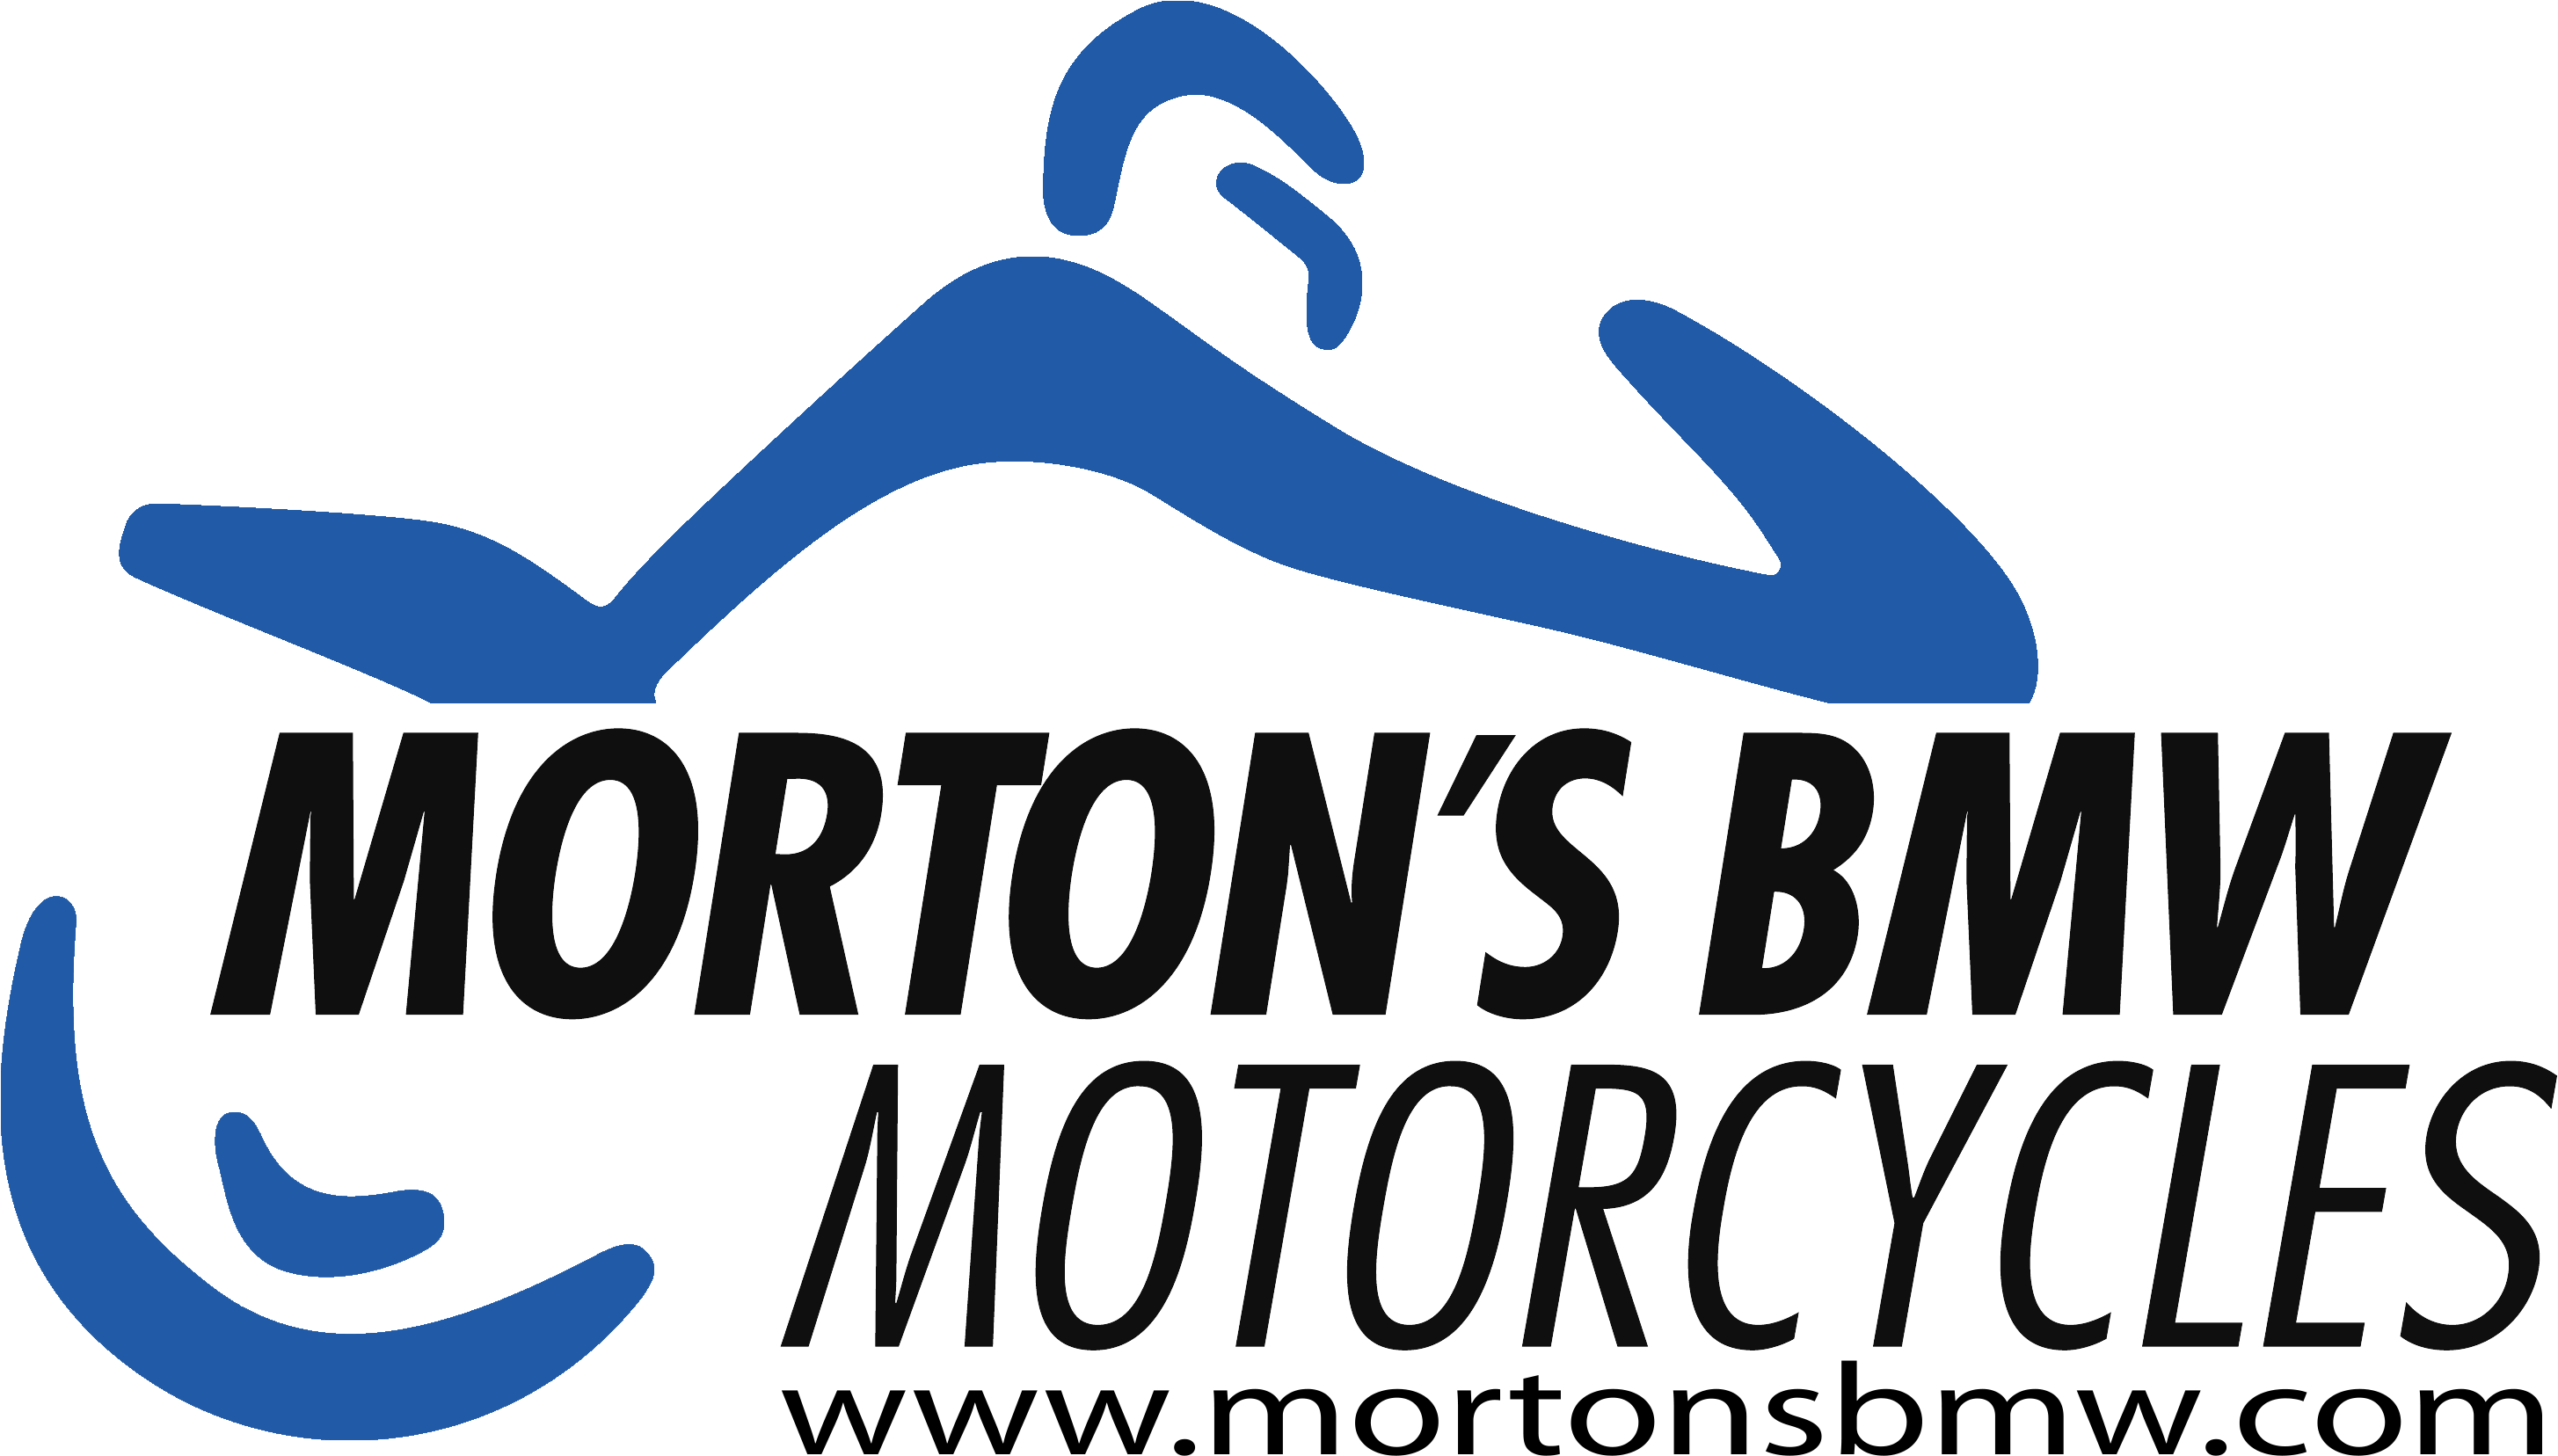 Bmw Motorcycles Baltimore Lovely Morton S Bmw Motorcycles - Morton's Bmw Motorcycles (3300x1800)